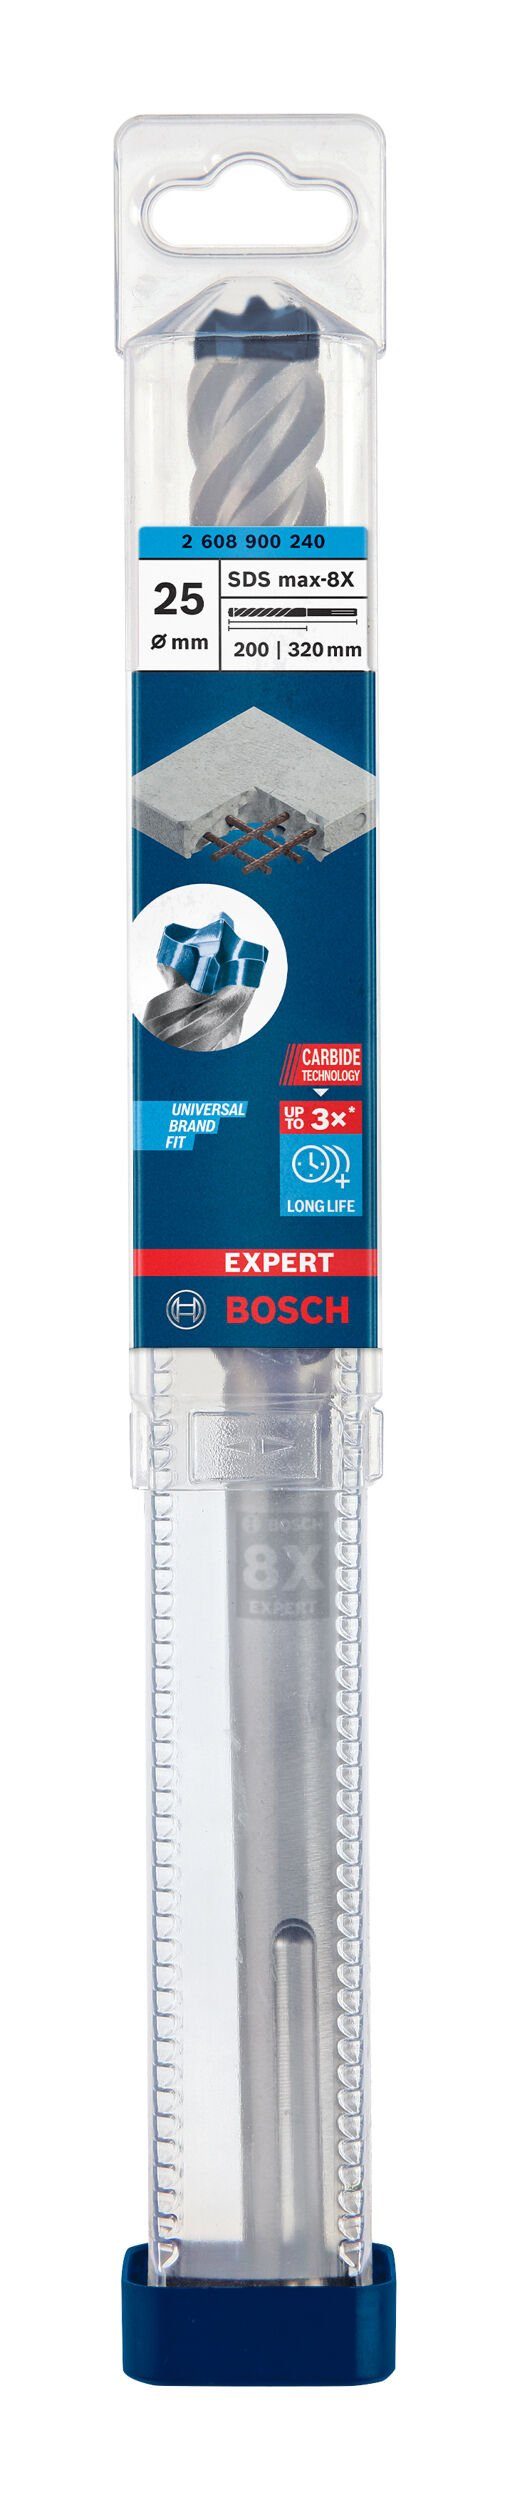 BOSCH Universalbohrer Hammerbohrer - 25 x max-8X, 200 320 x Expert mm SDS